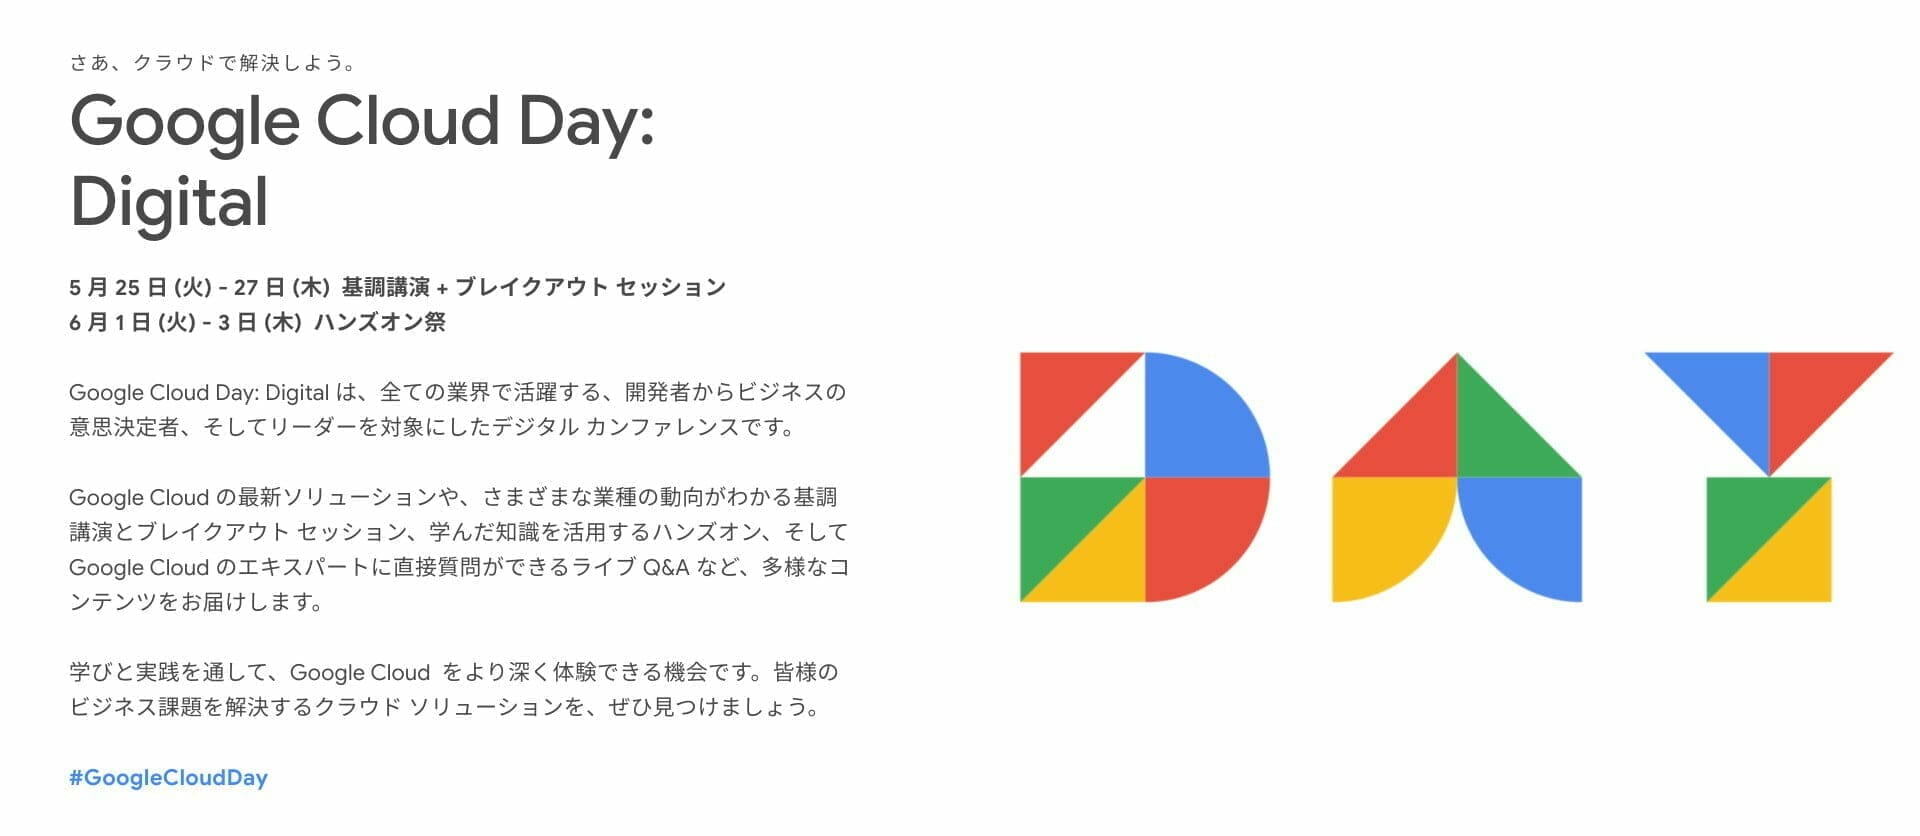 [GCP] Google Cloud Day: Digital